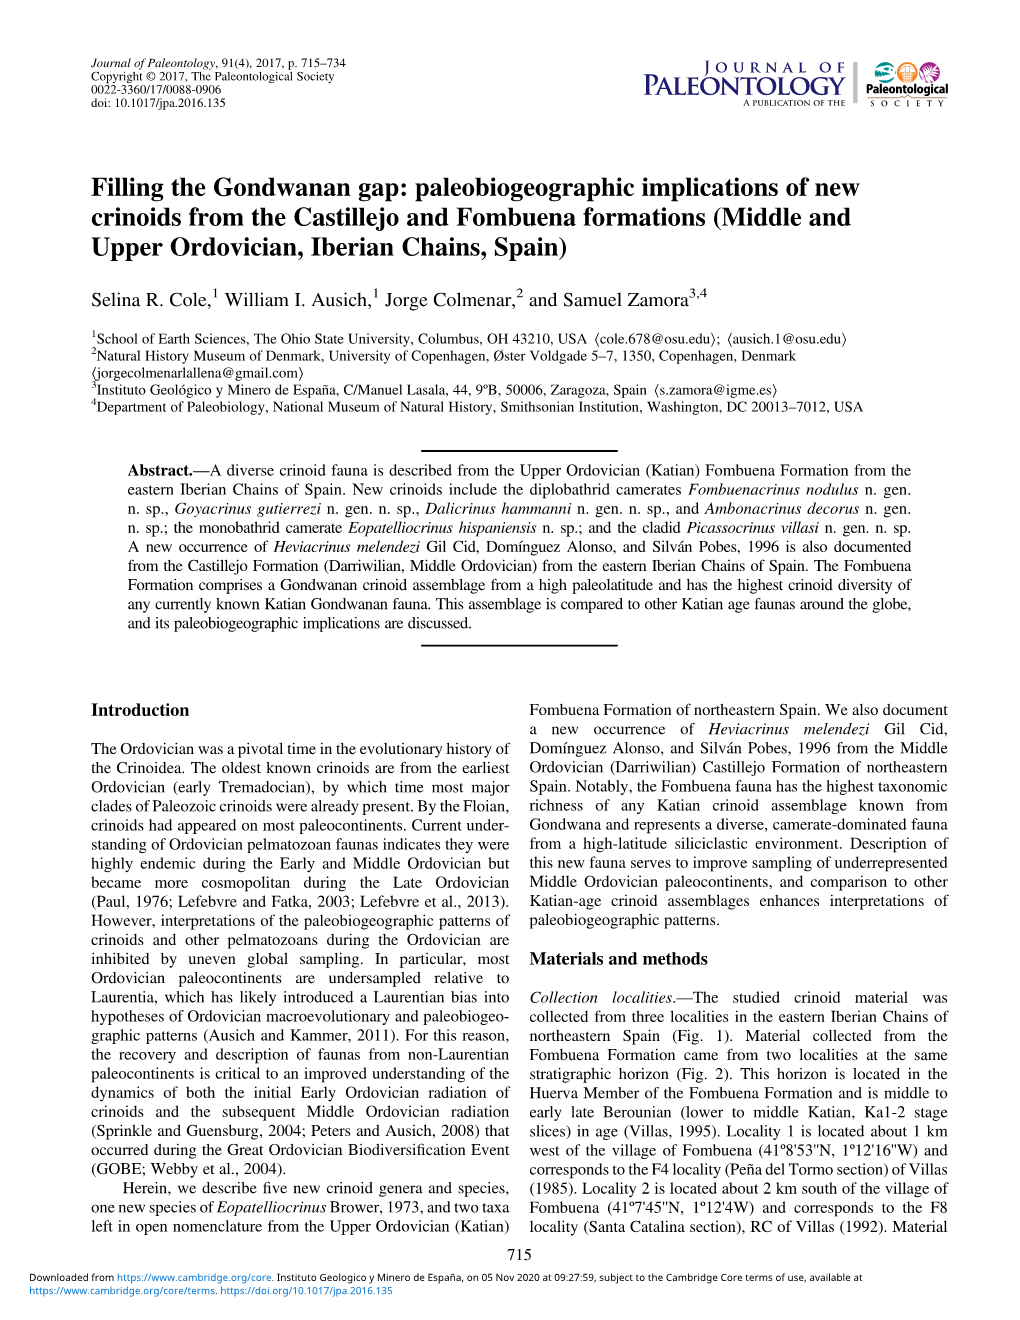 Filling the Gondwanan Gap: Paleobiogeographic